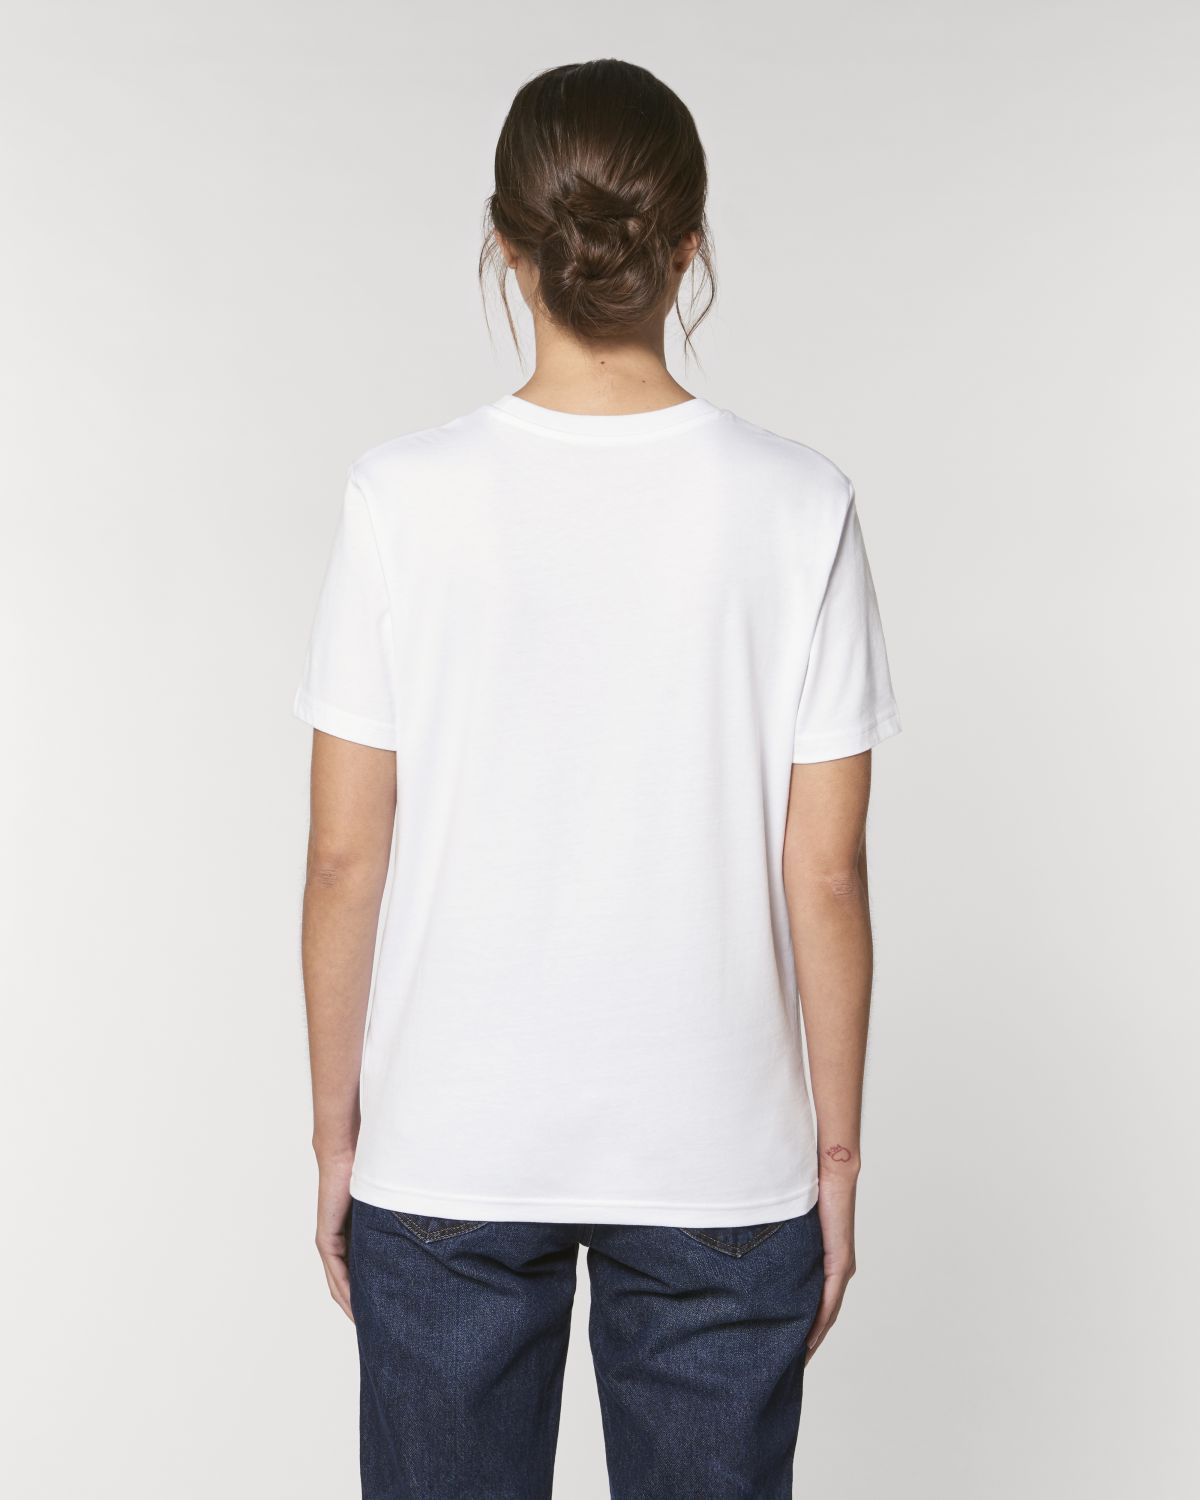 BTBN White Women's T-Shirt - DP